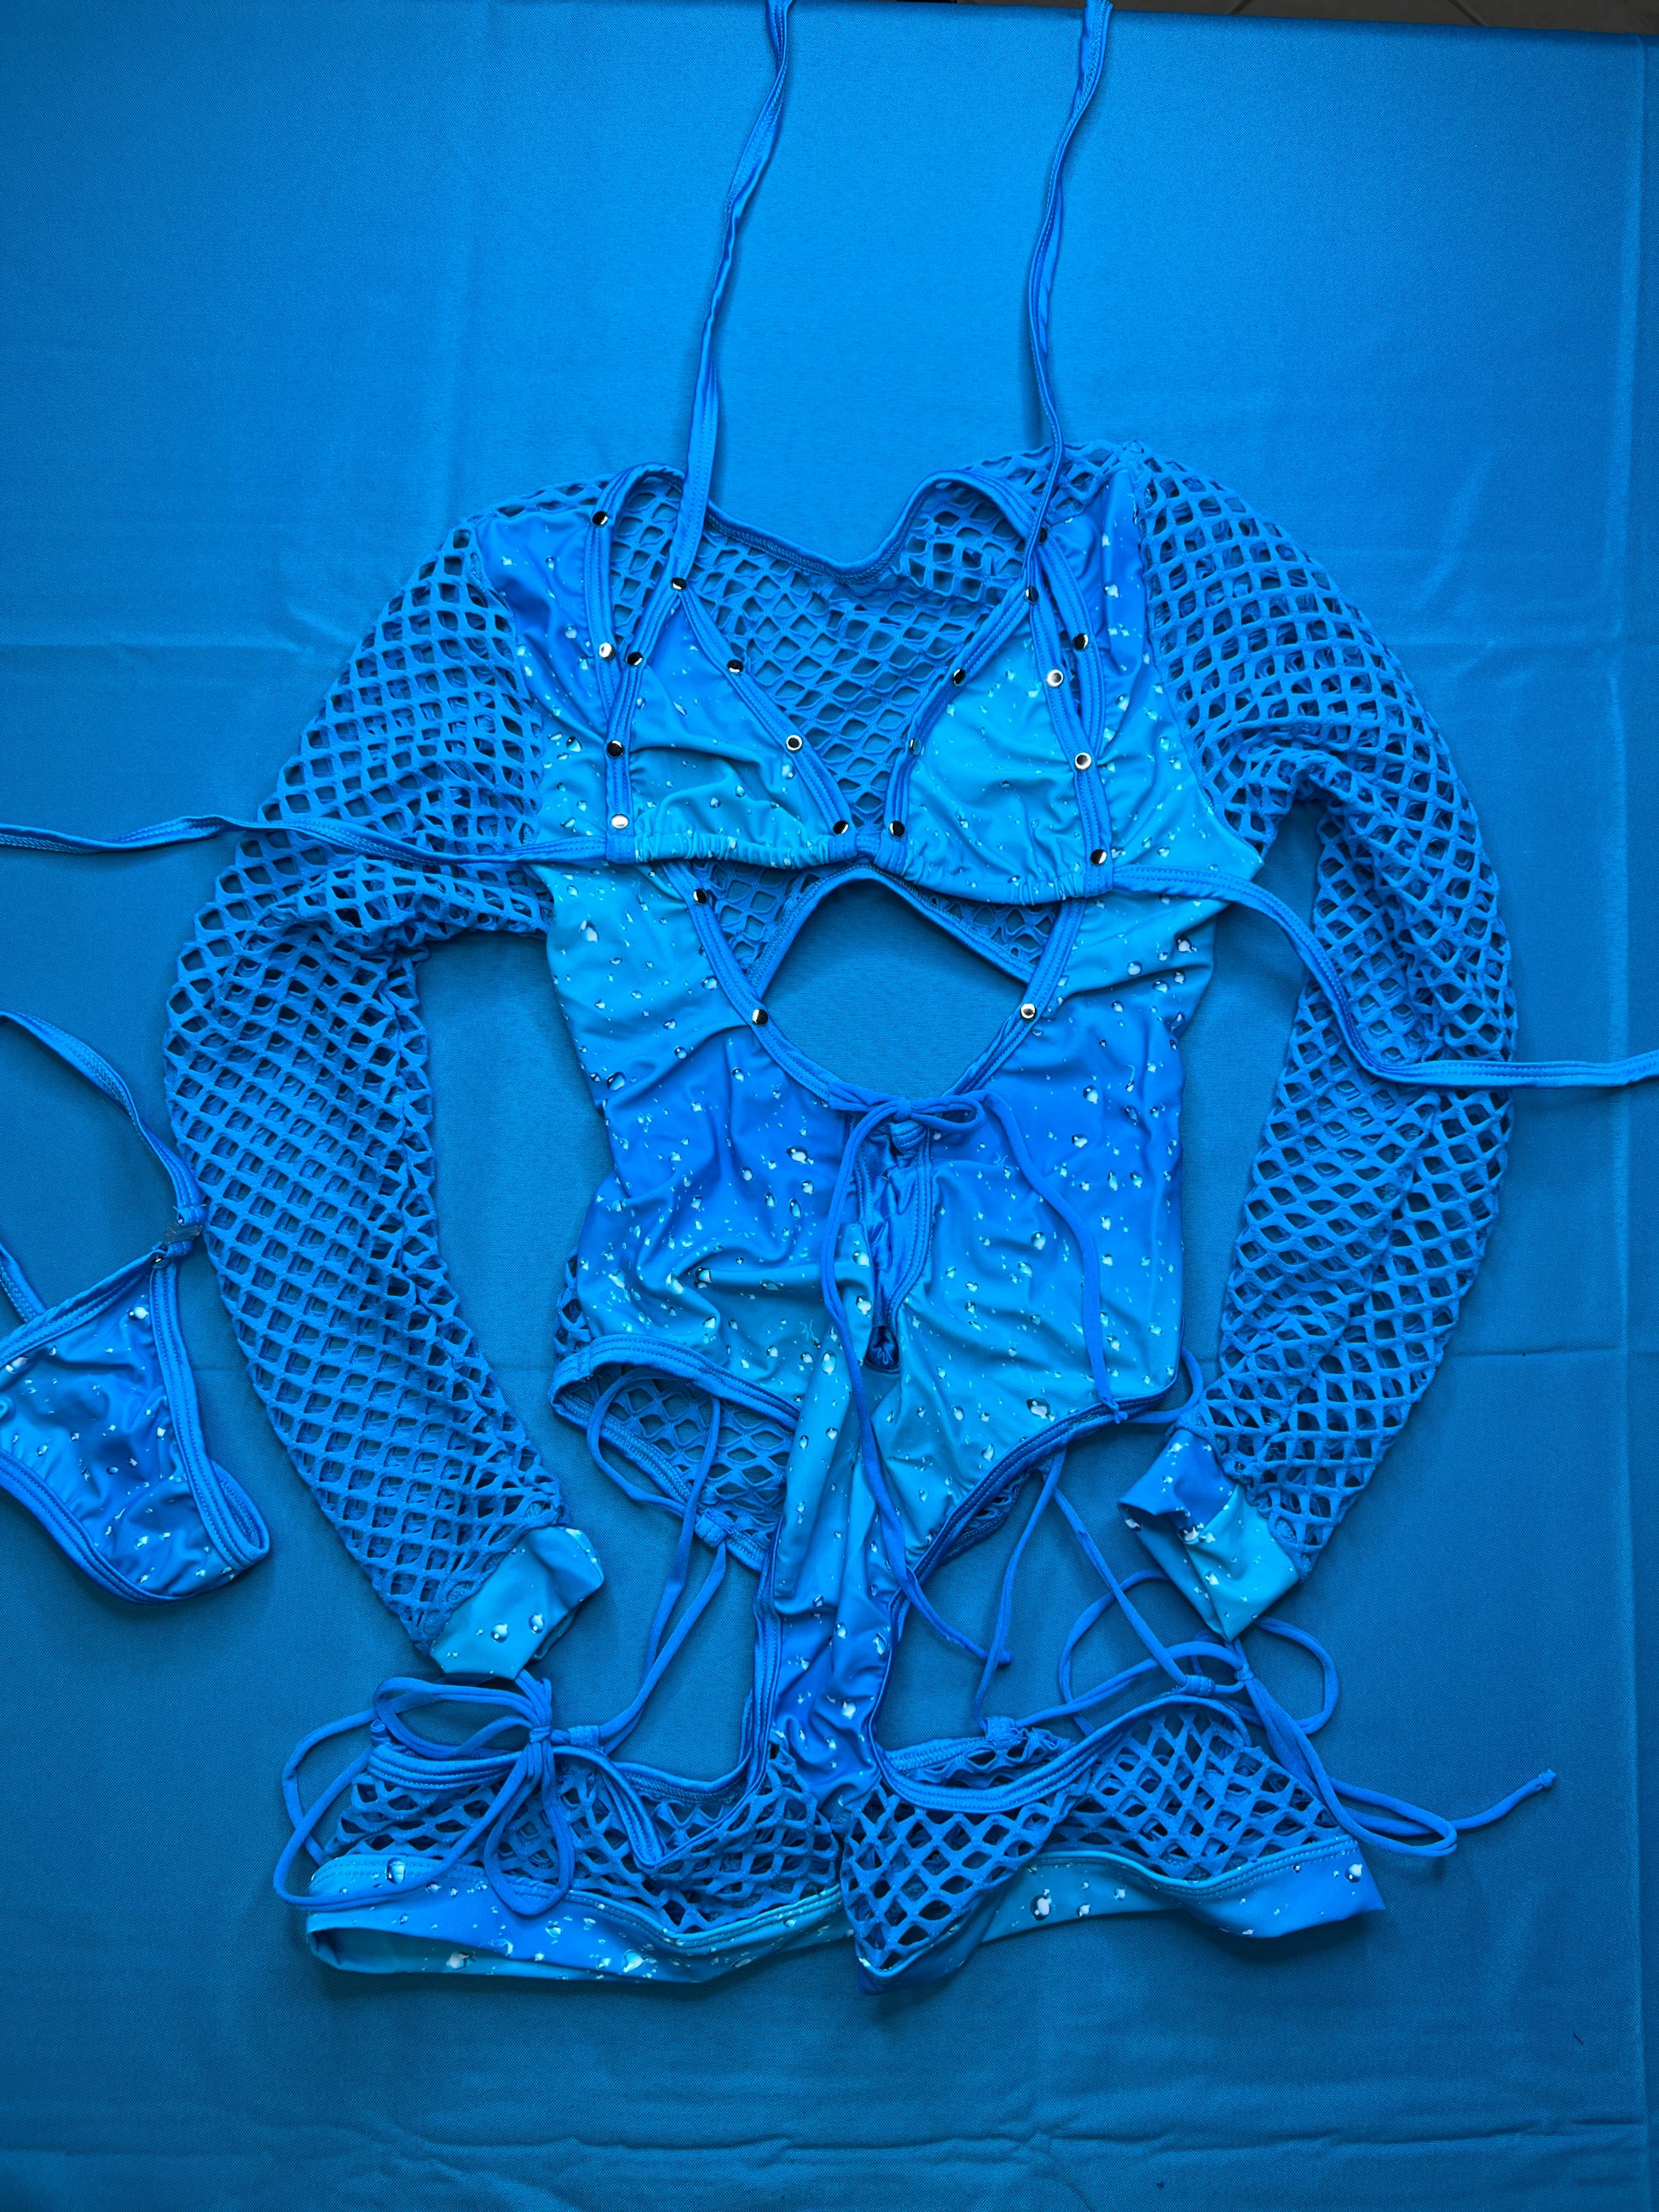 One-Piece Blue Fishnet/Water Print Romper Dancewear Outfit